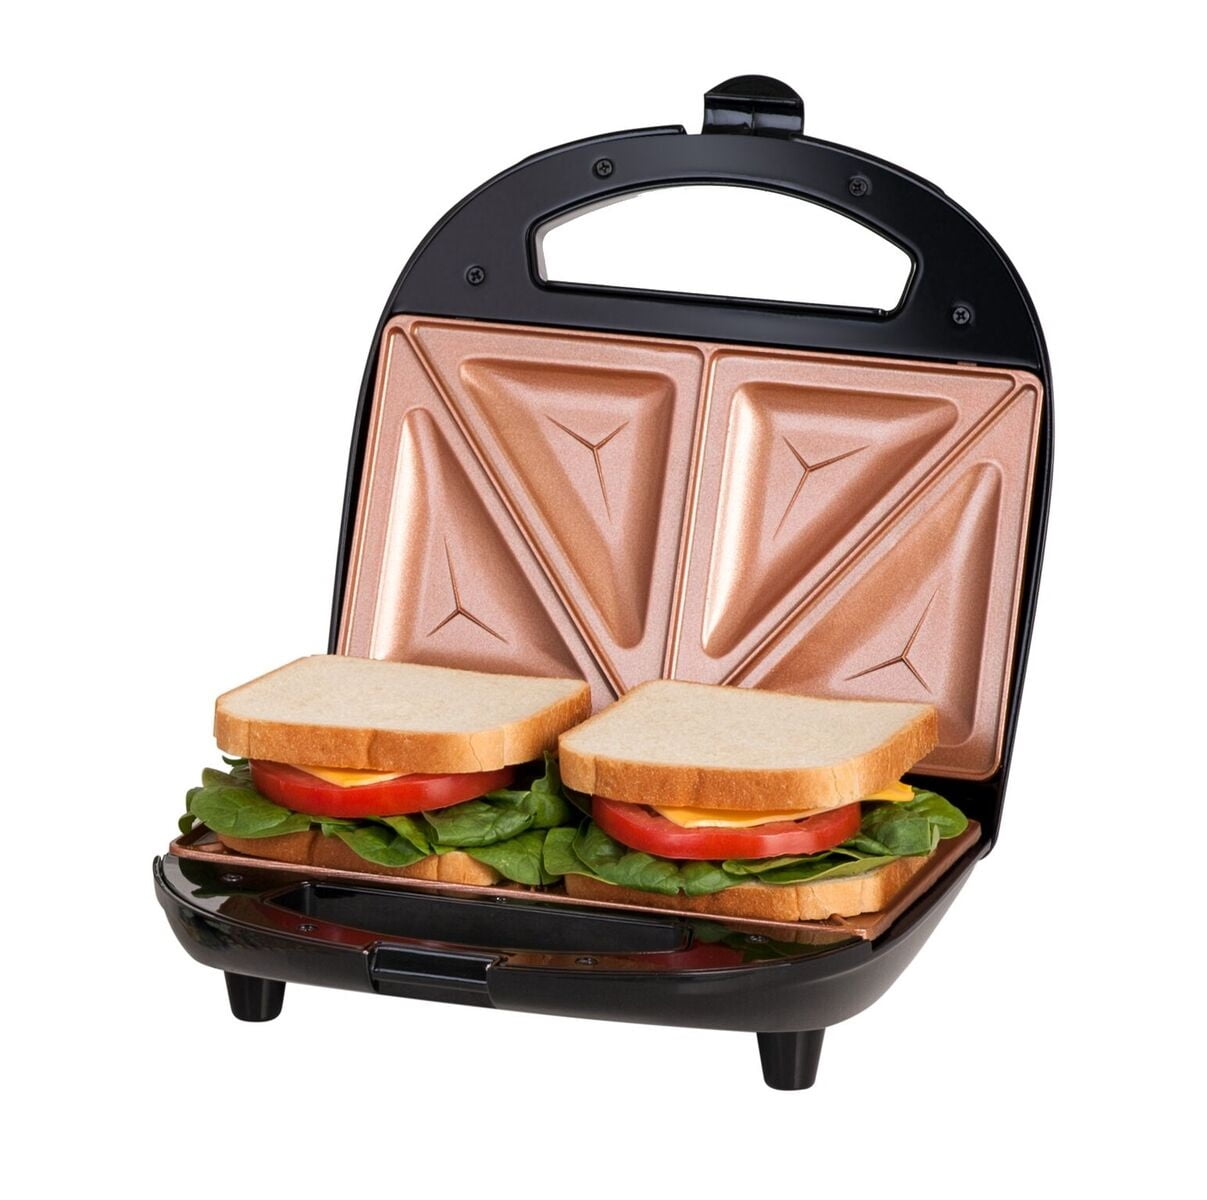 Outdoor Revolution Double Sandwich Maker